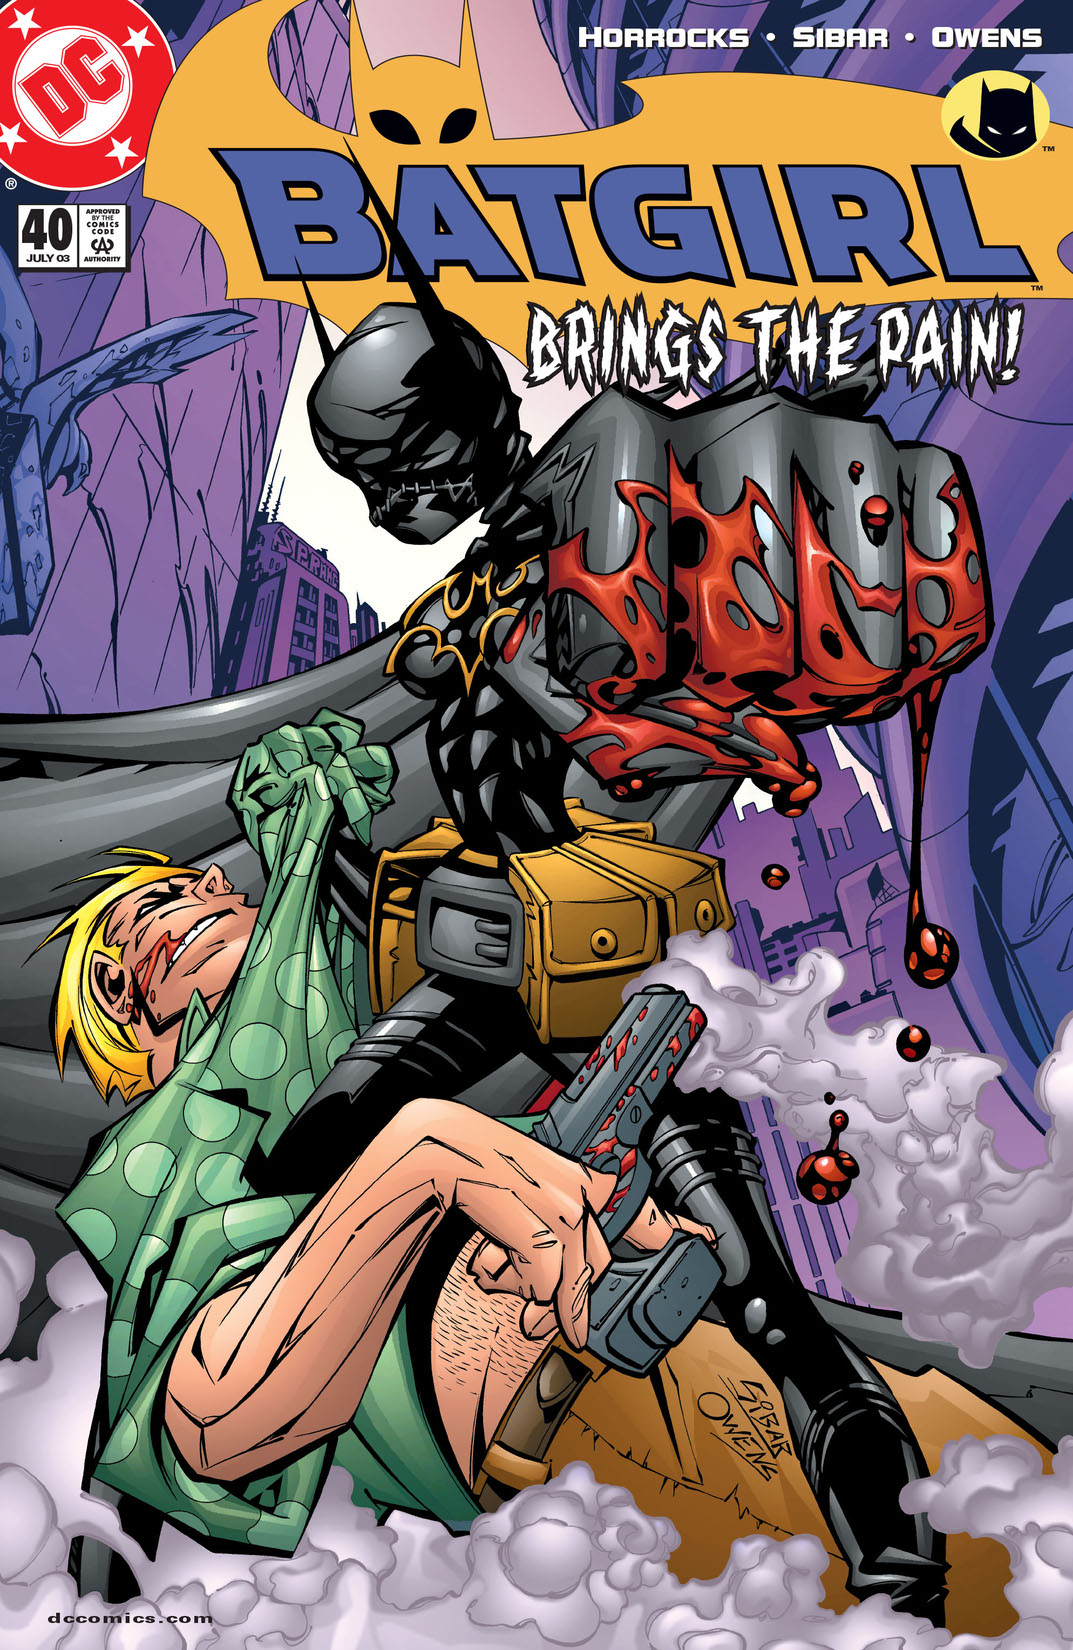 Batgirl (2000-) #40 preview images